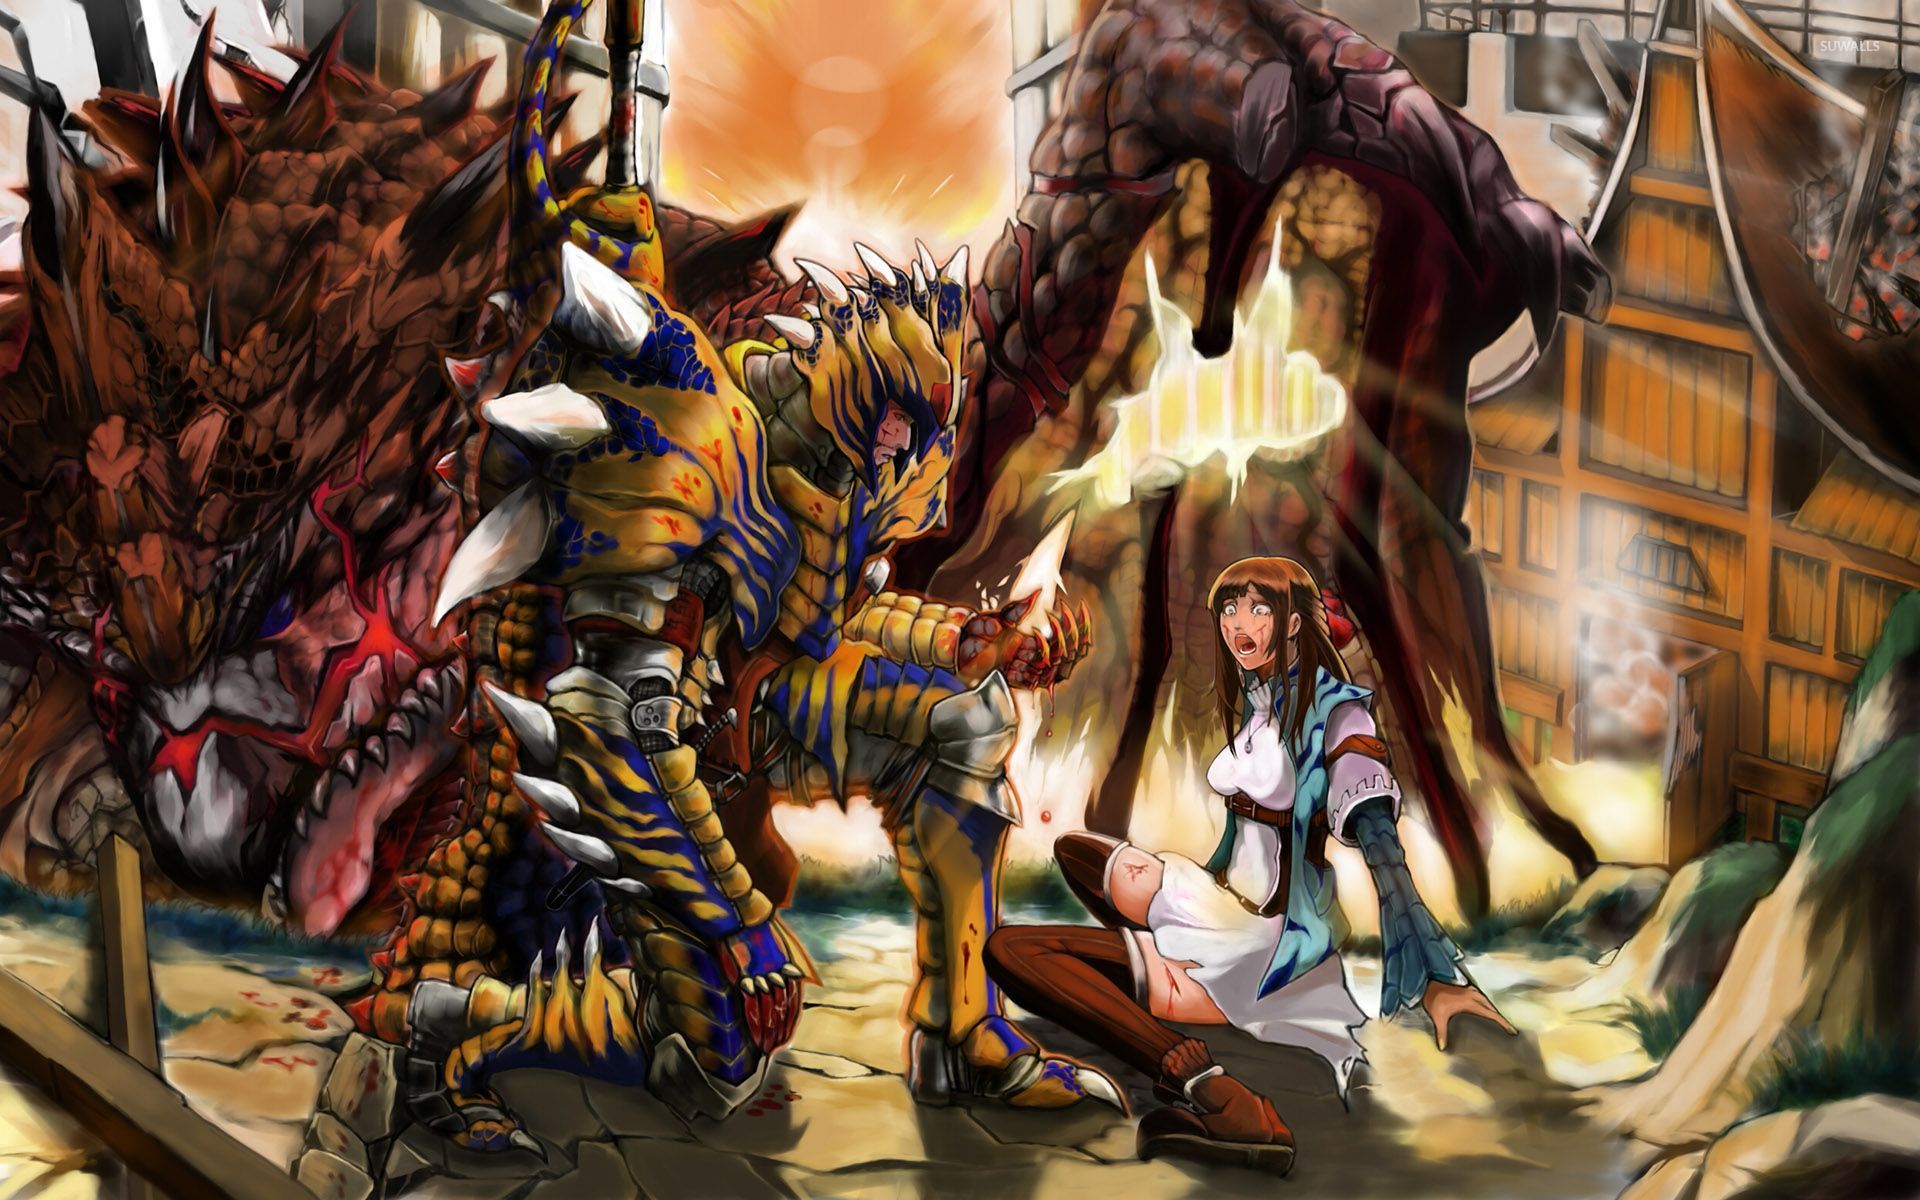 monster anime wallpaper,action adventure game,cg artwork,pc game,fiction,mythology